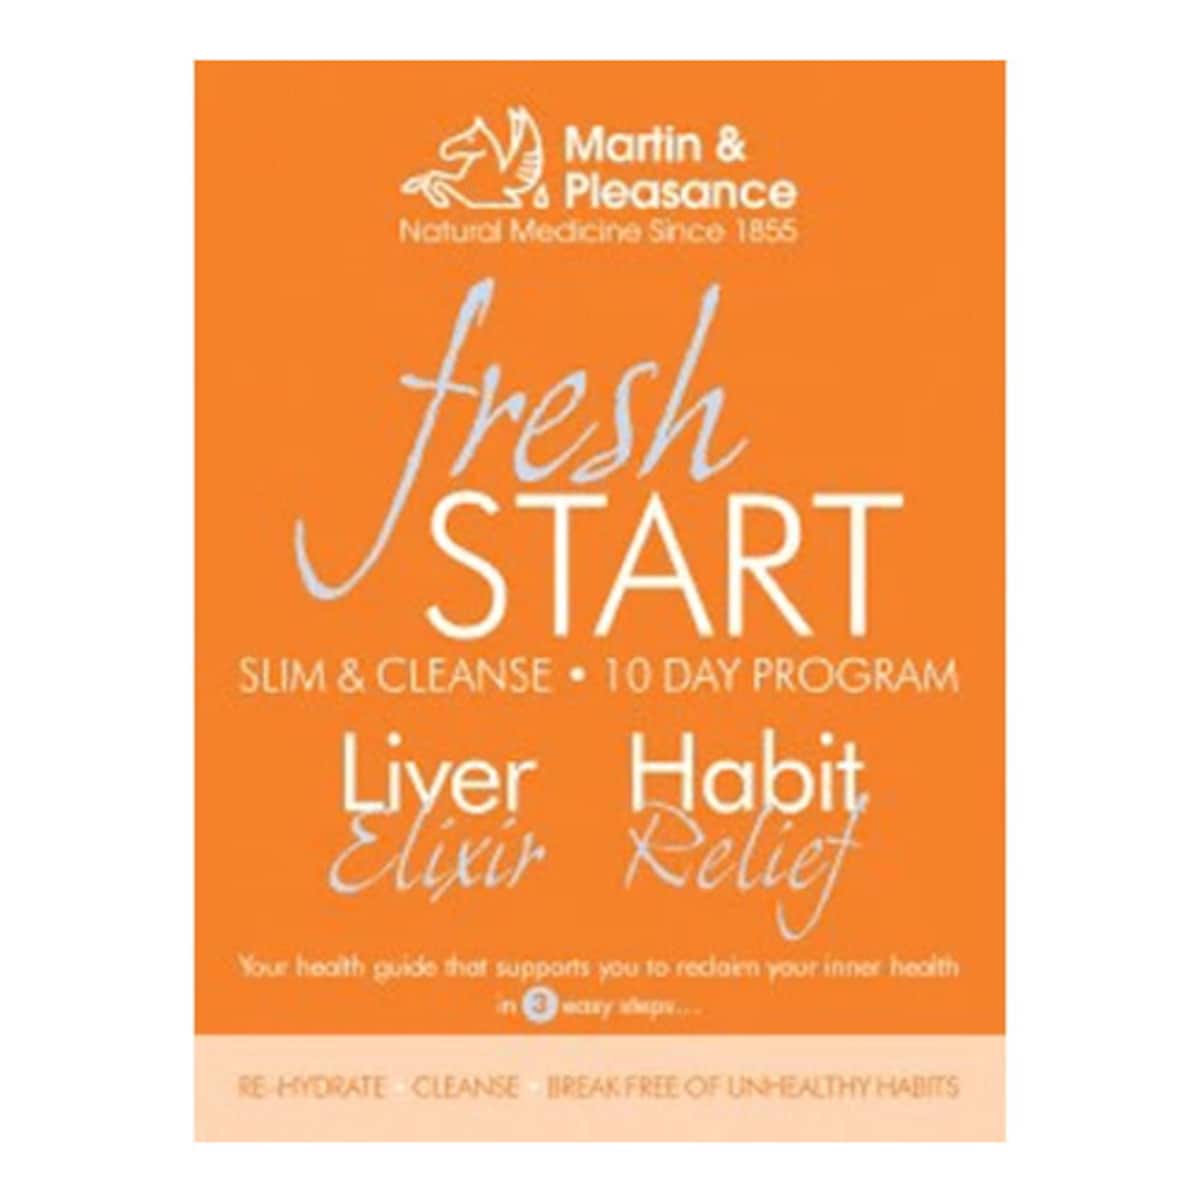 Martin & Pleasance Fresh Start Pack Slim & Cleanse 10 Day Program